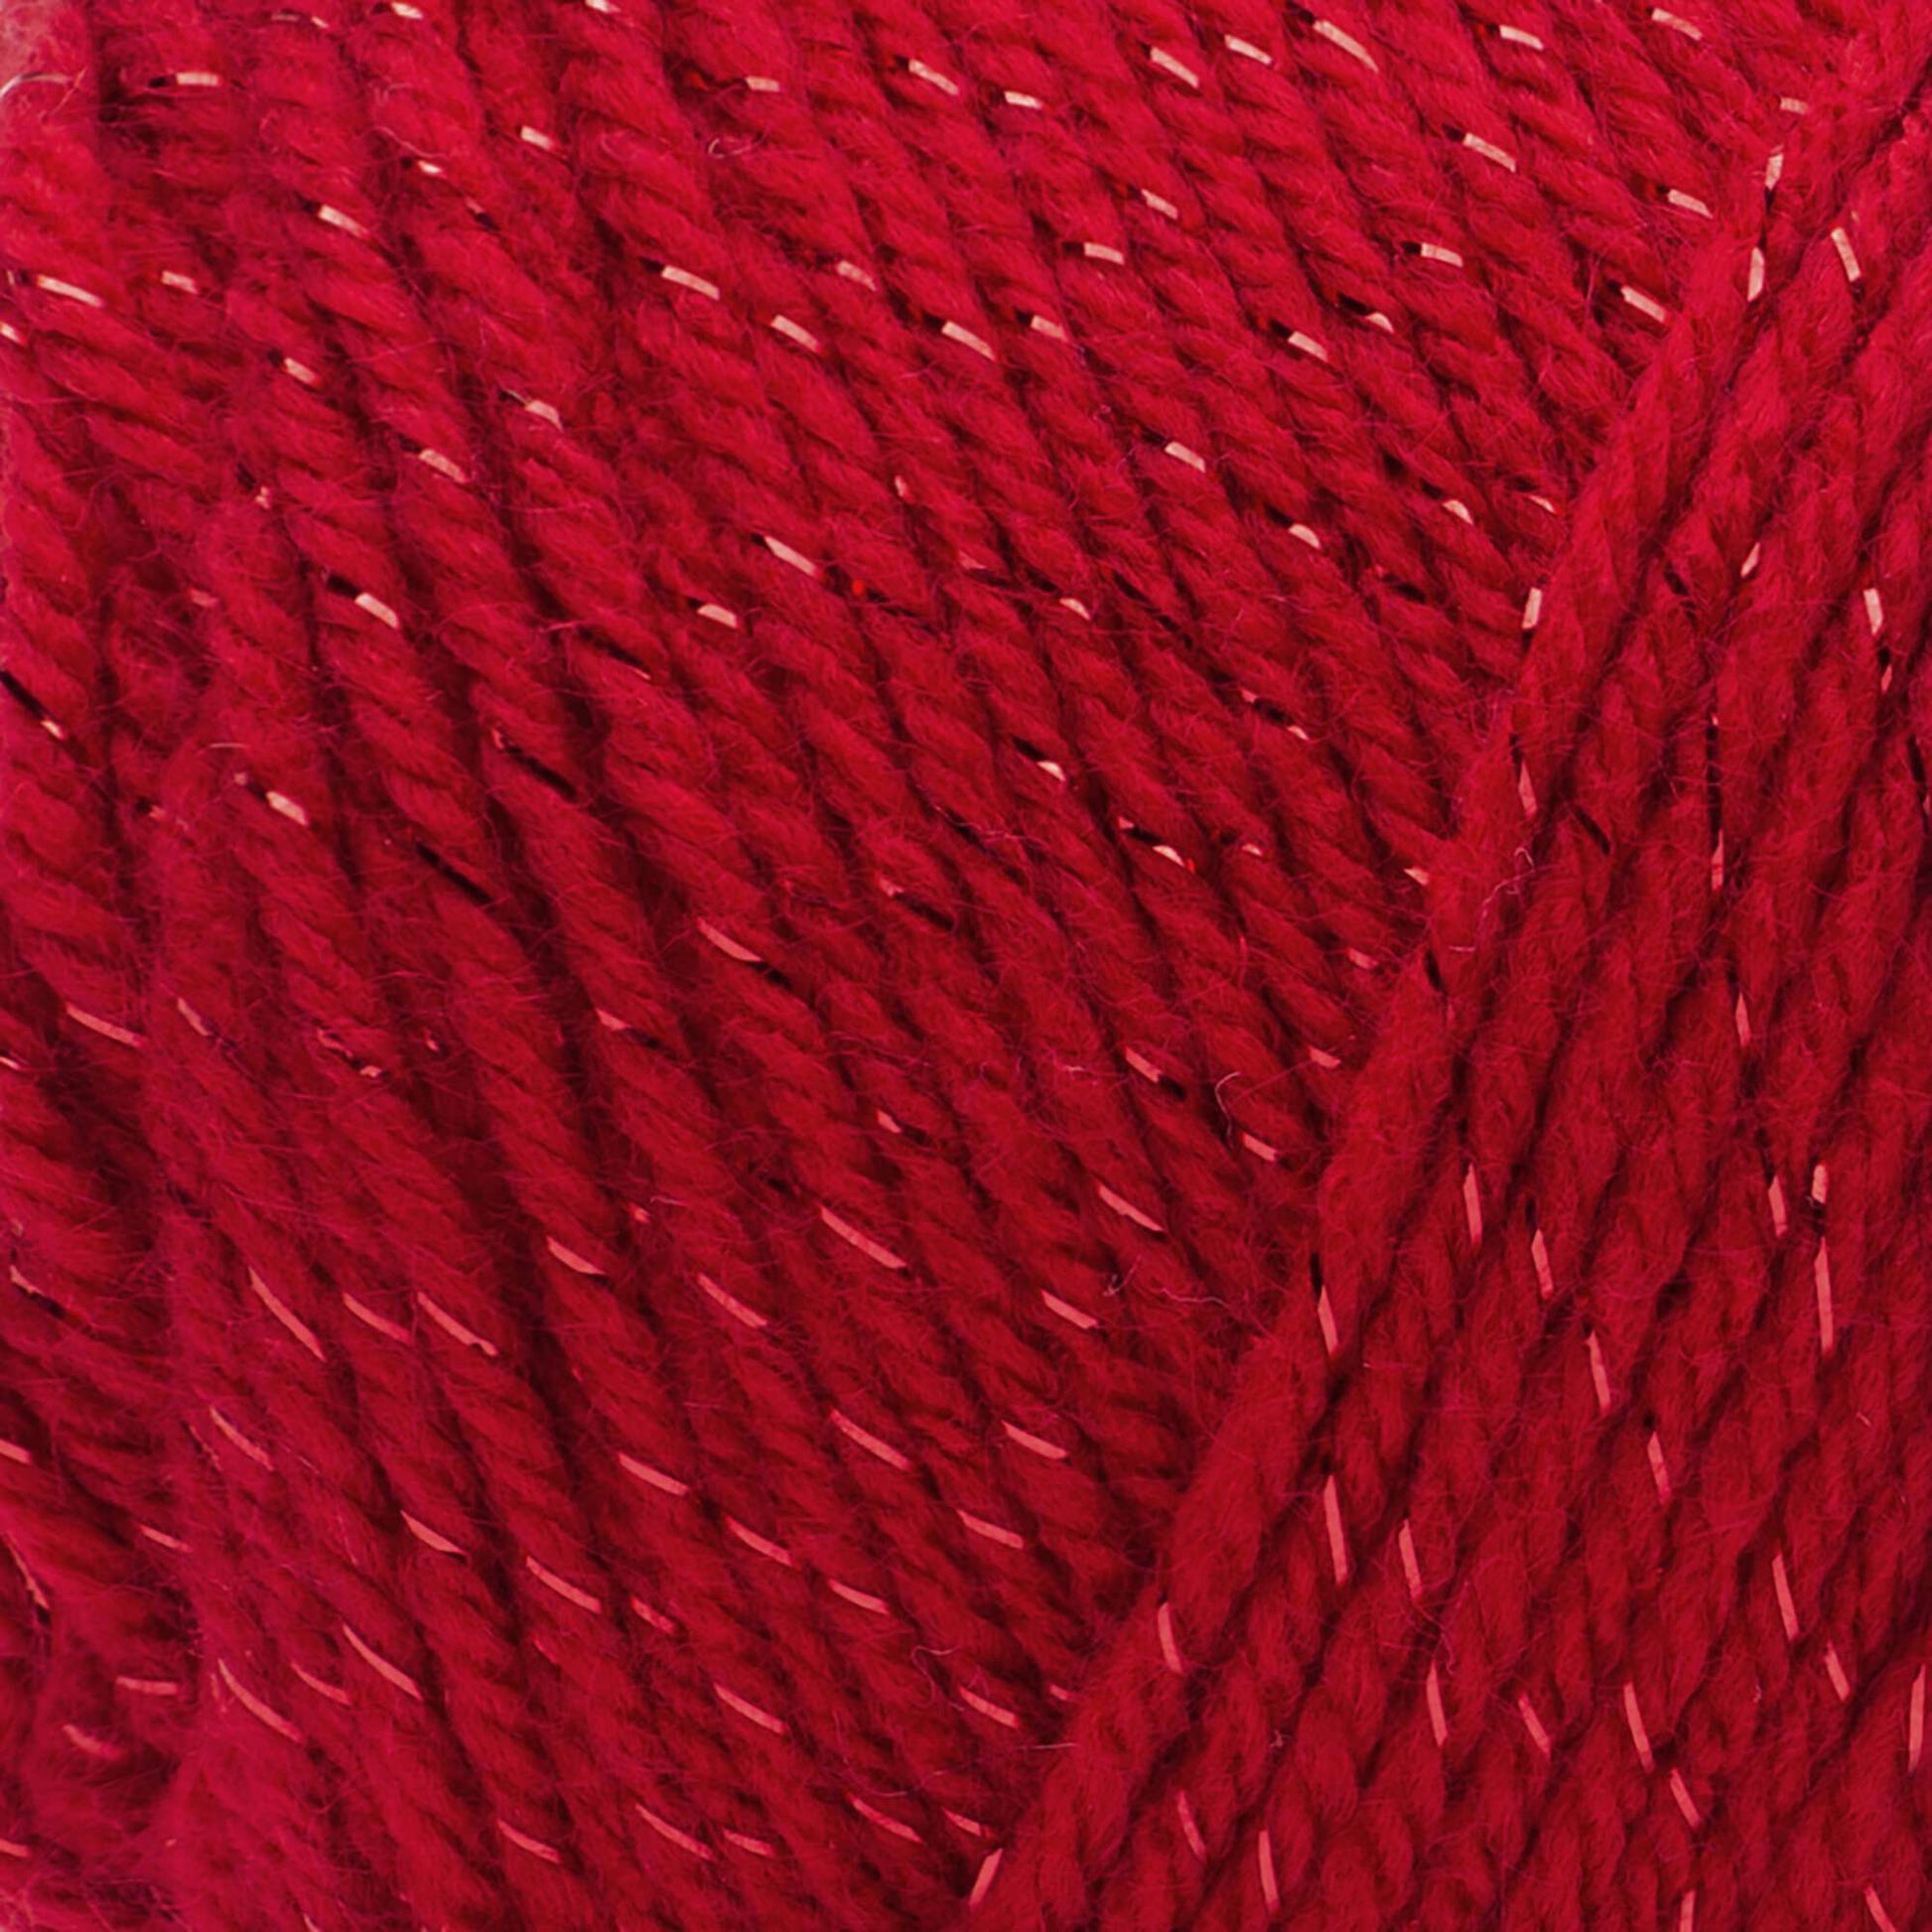 Red Heart Super Saver Metallic Yarn